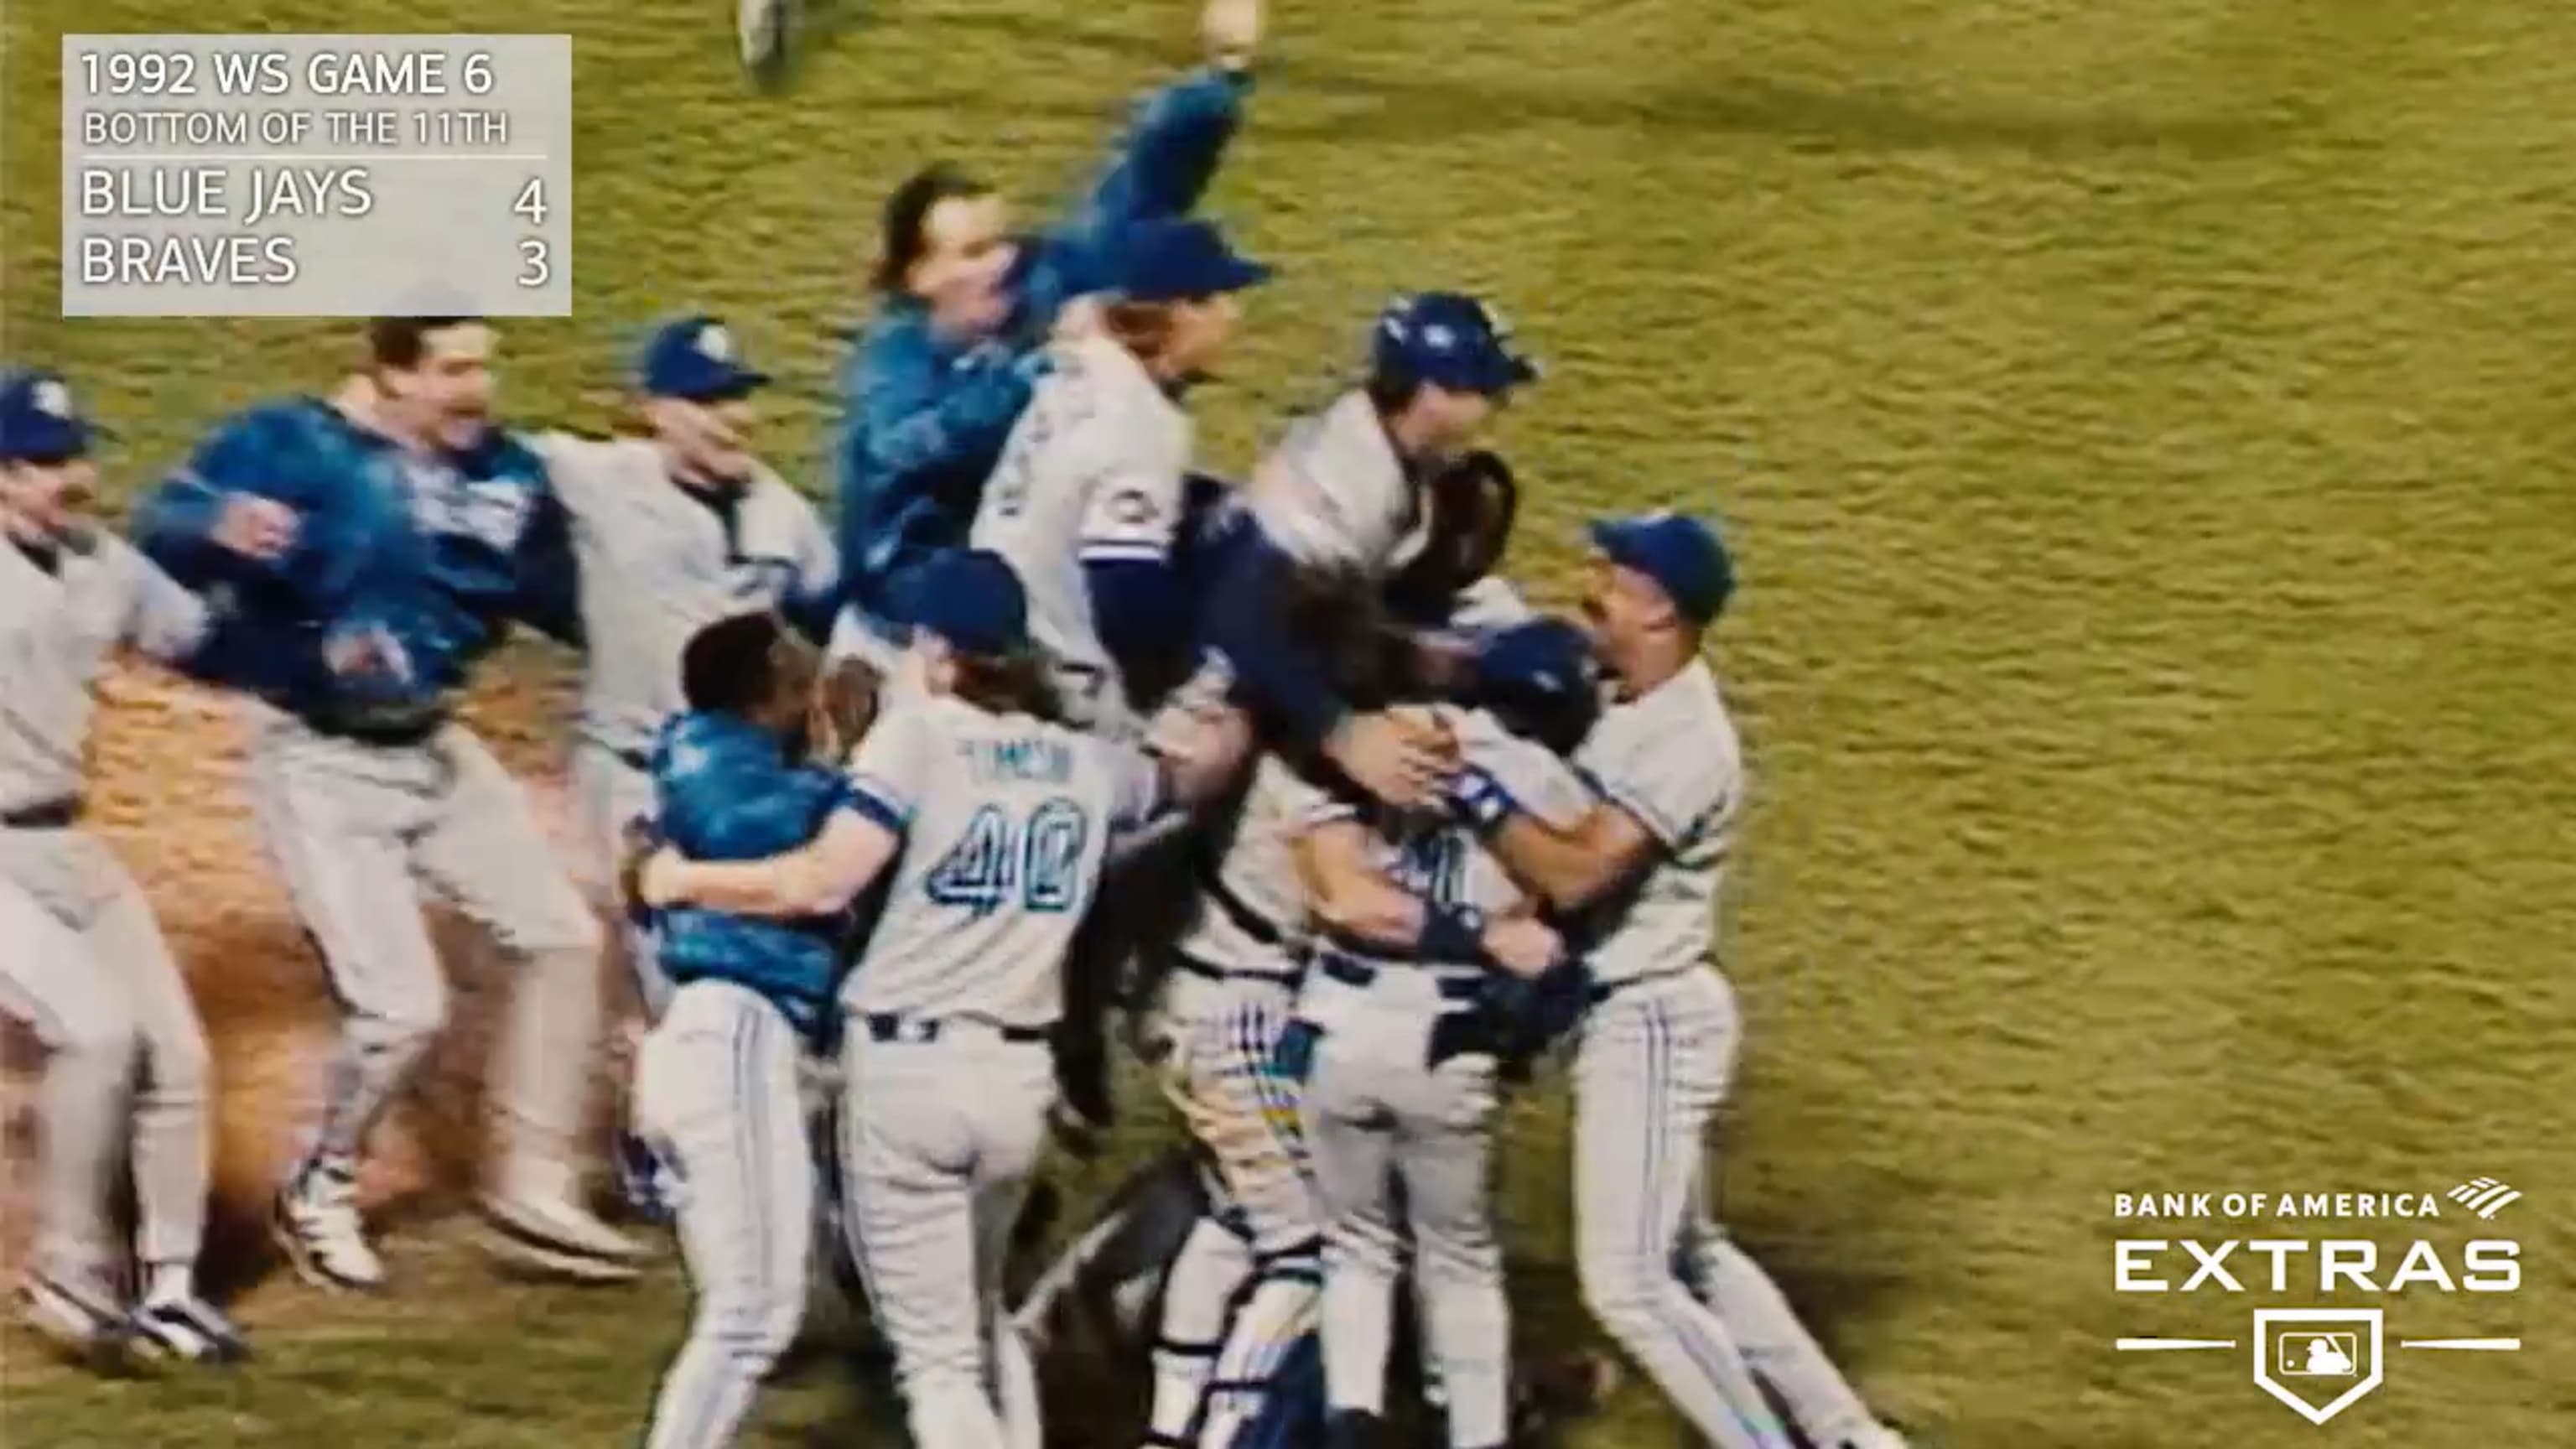 Toronto Blue Jays, 1992 World Series Champions, Framed Team